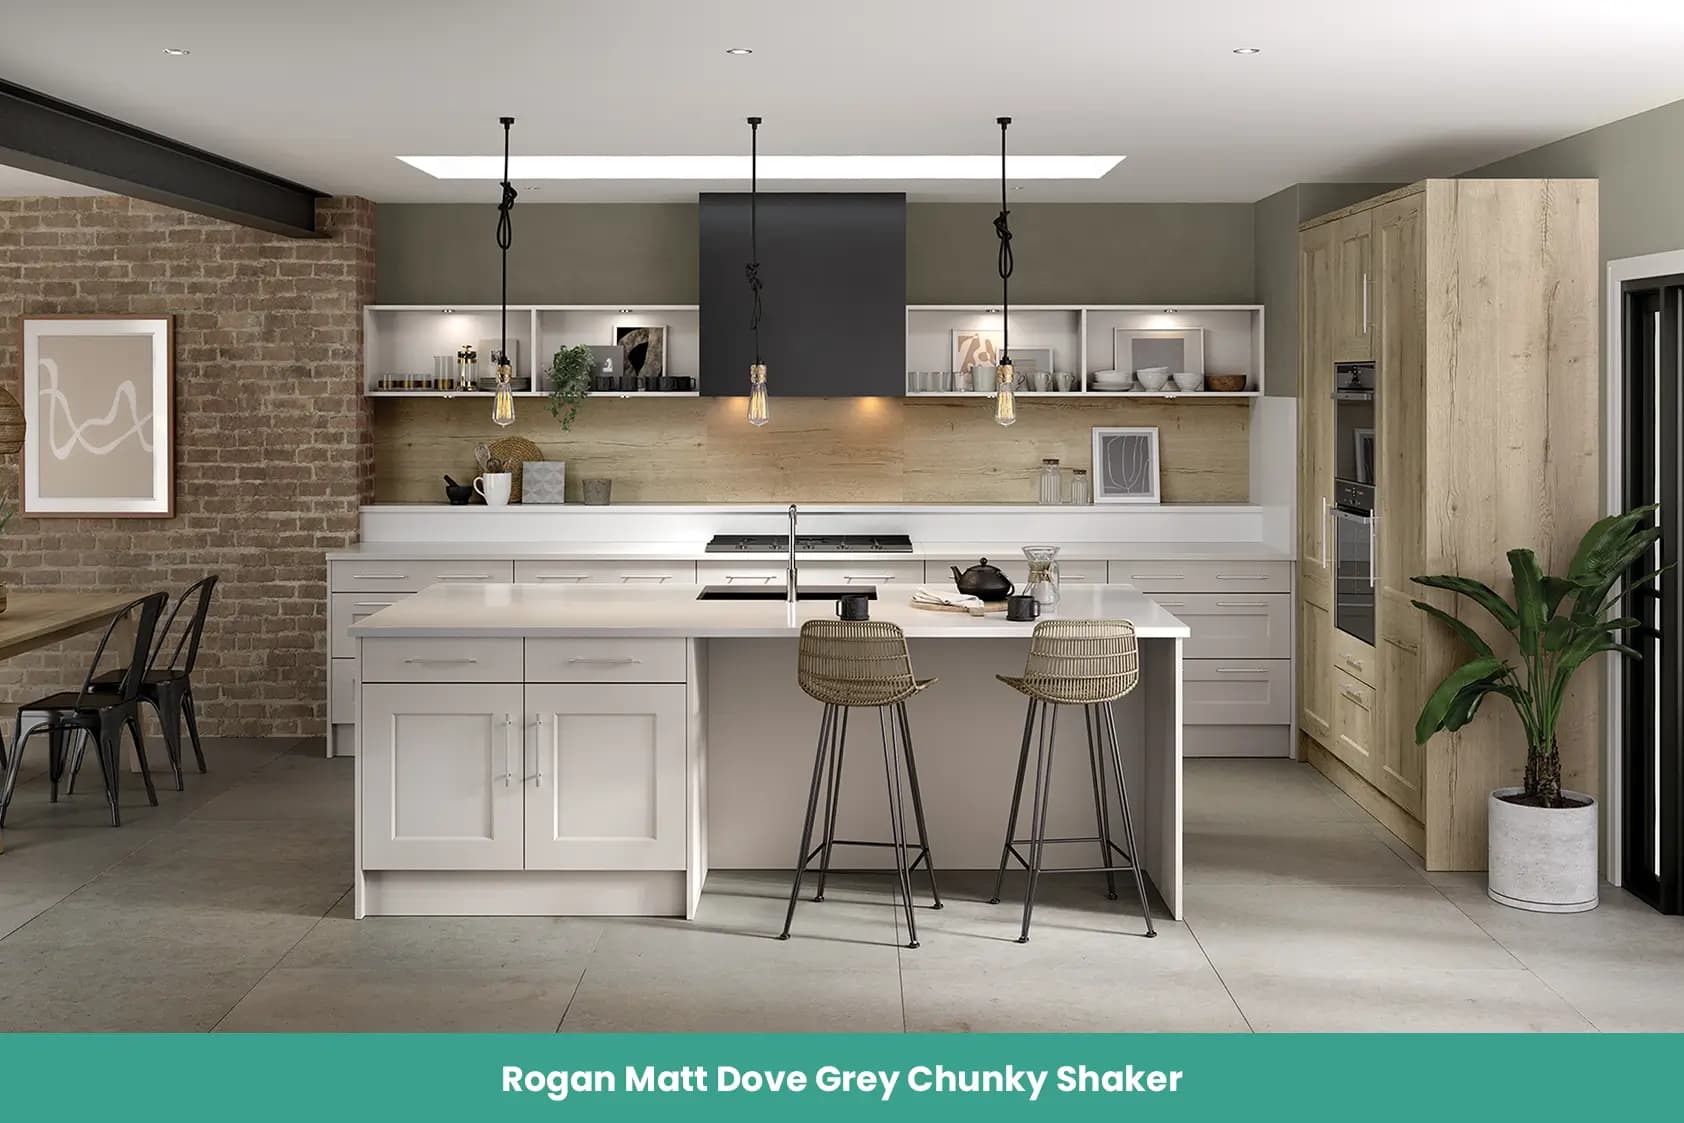 Rogan Matt Dove Grey Chunky Shaker Kitchen